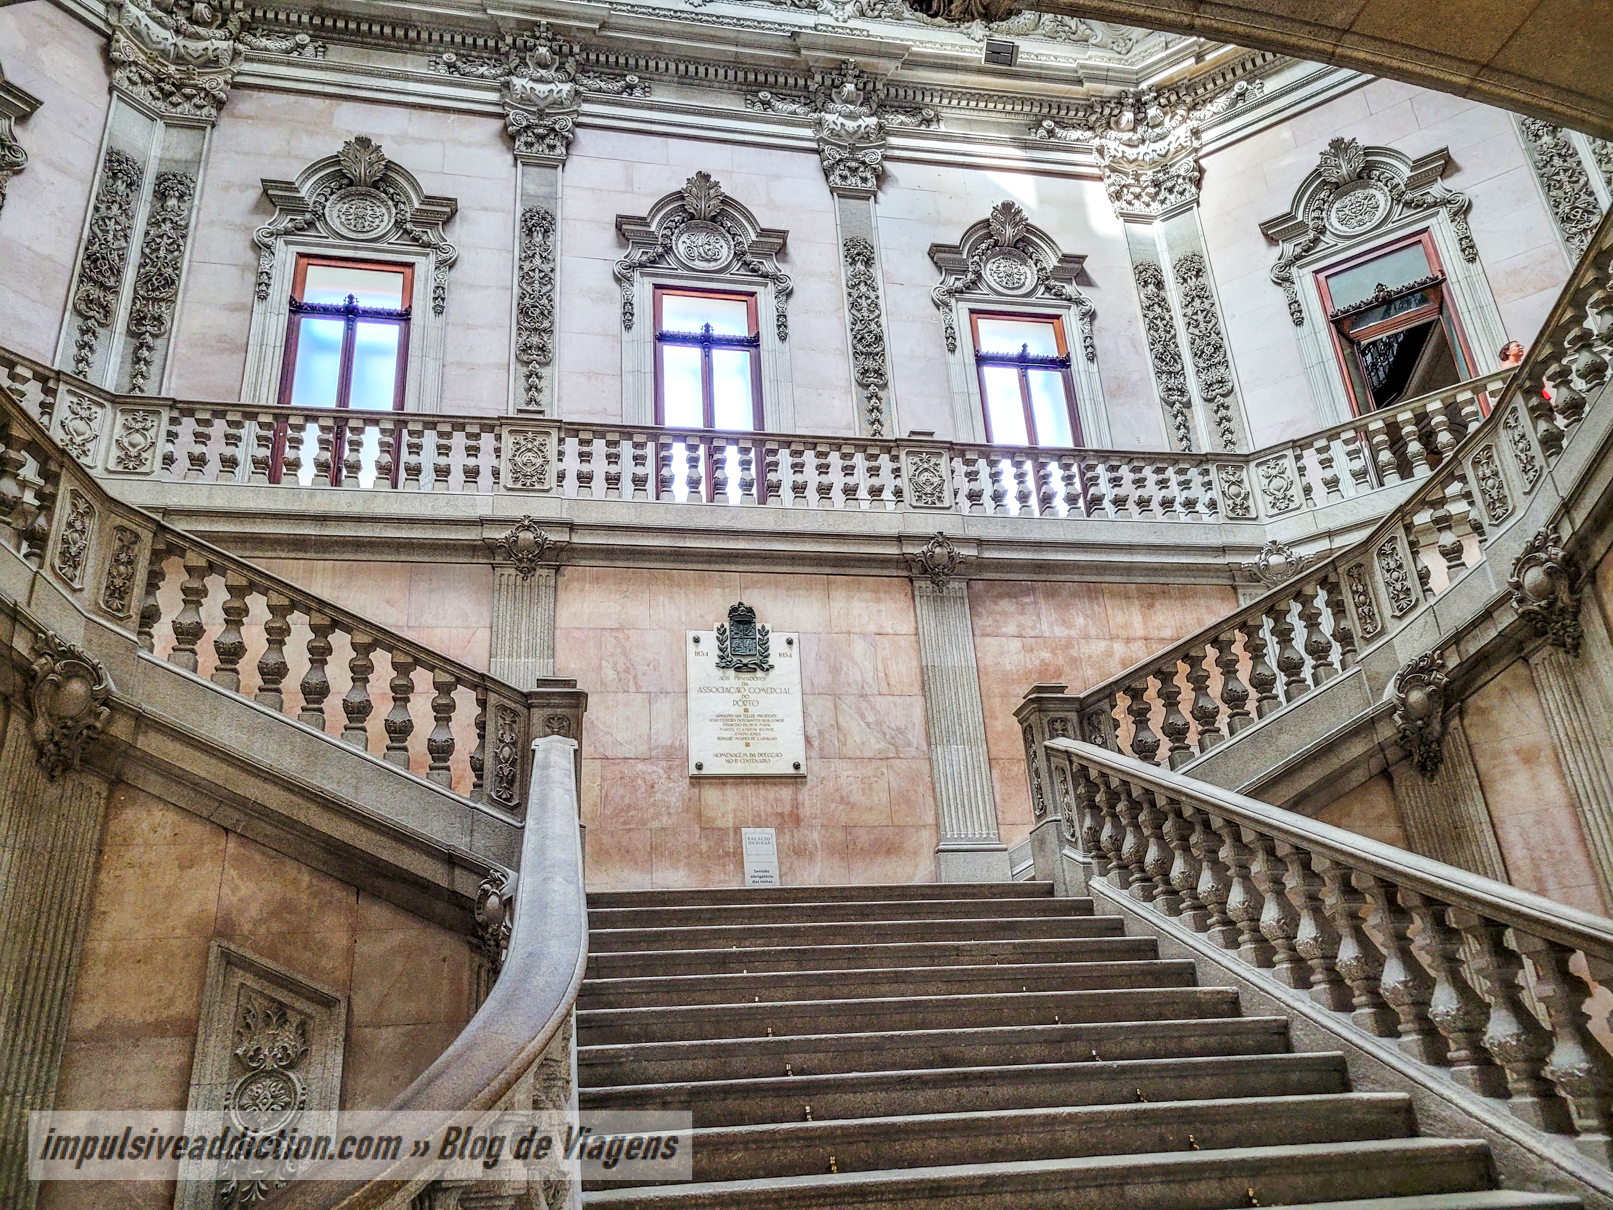 Zona da Escadaria do Palácio da Bolsa do Porto